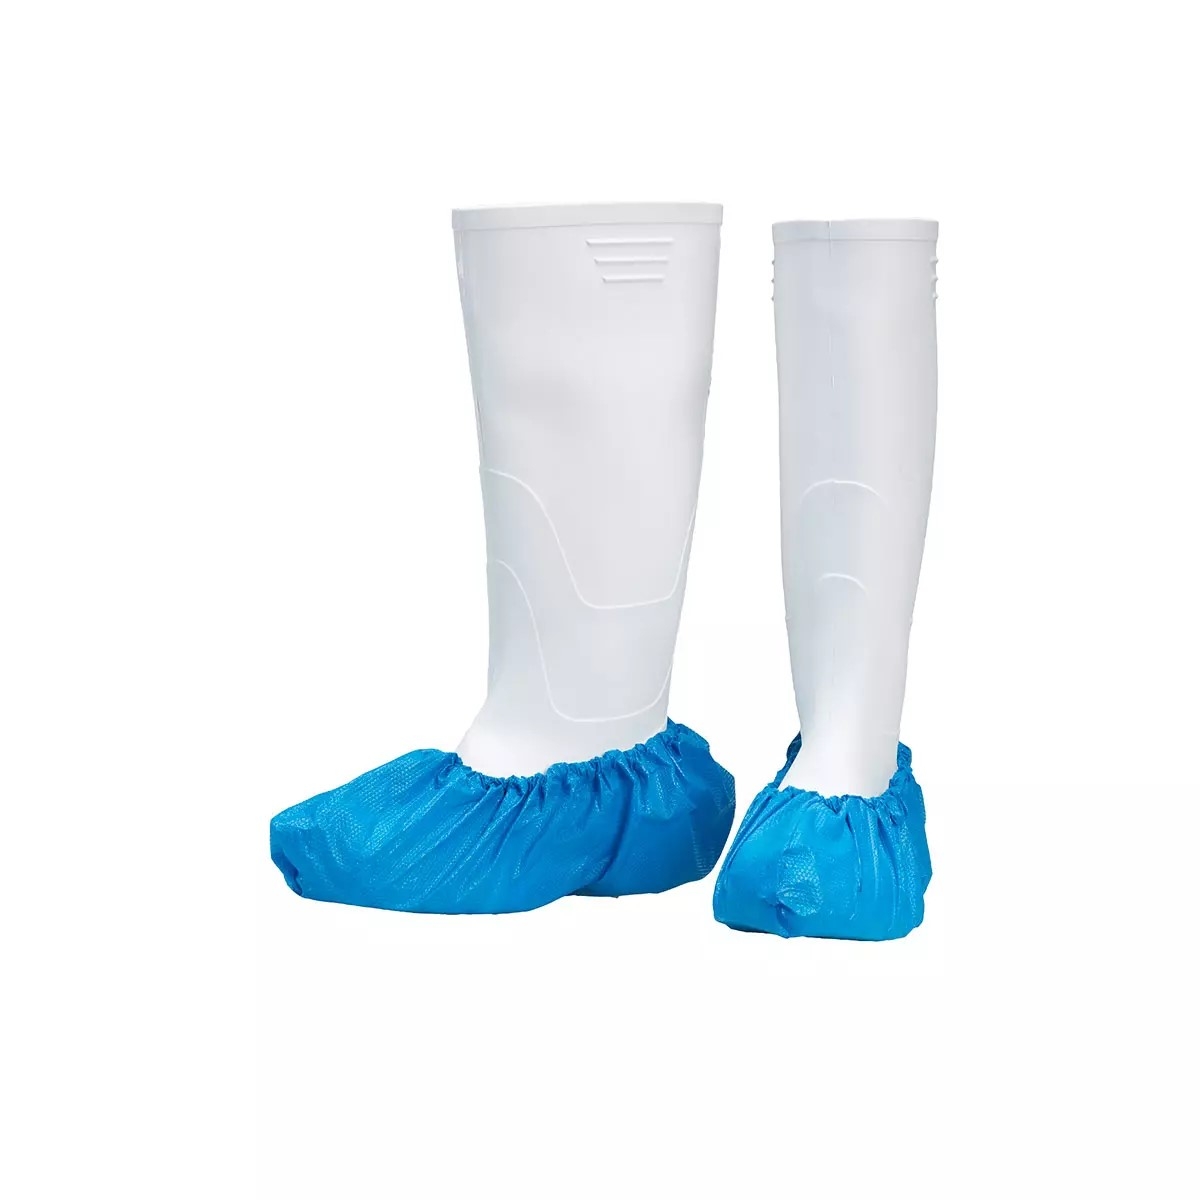 AMPRI-Einweg-VPE-berschuhe, Einmal-Schuhe, MED COMFORT, Ultra Stark, mit Gummizug, 15 x 42 cm, blau, VE = 20 Pkg.  50 Stck